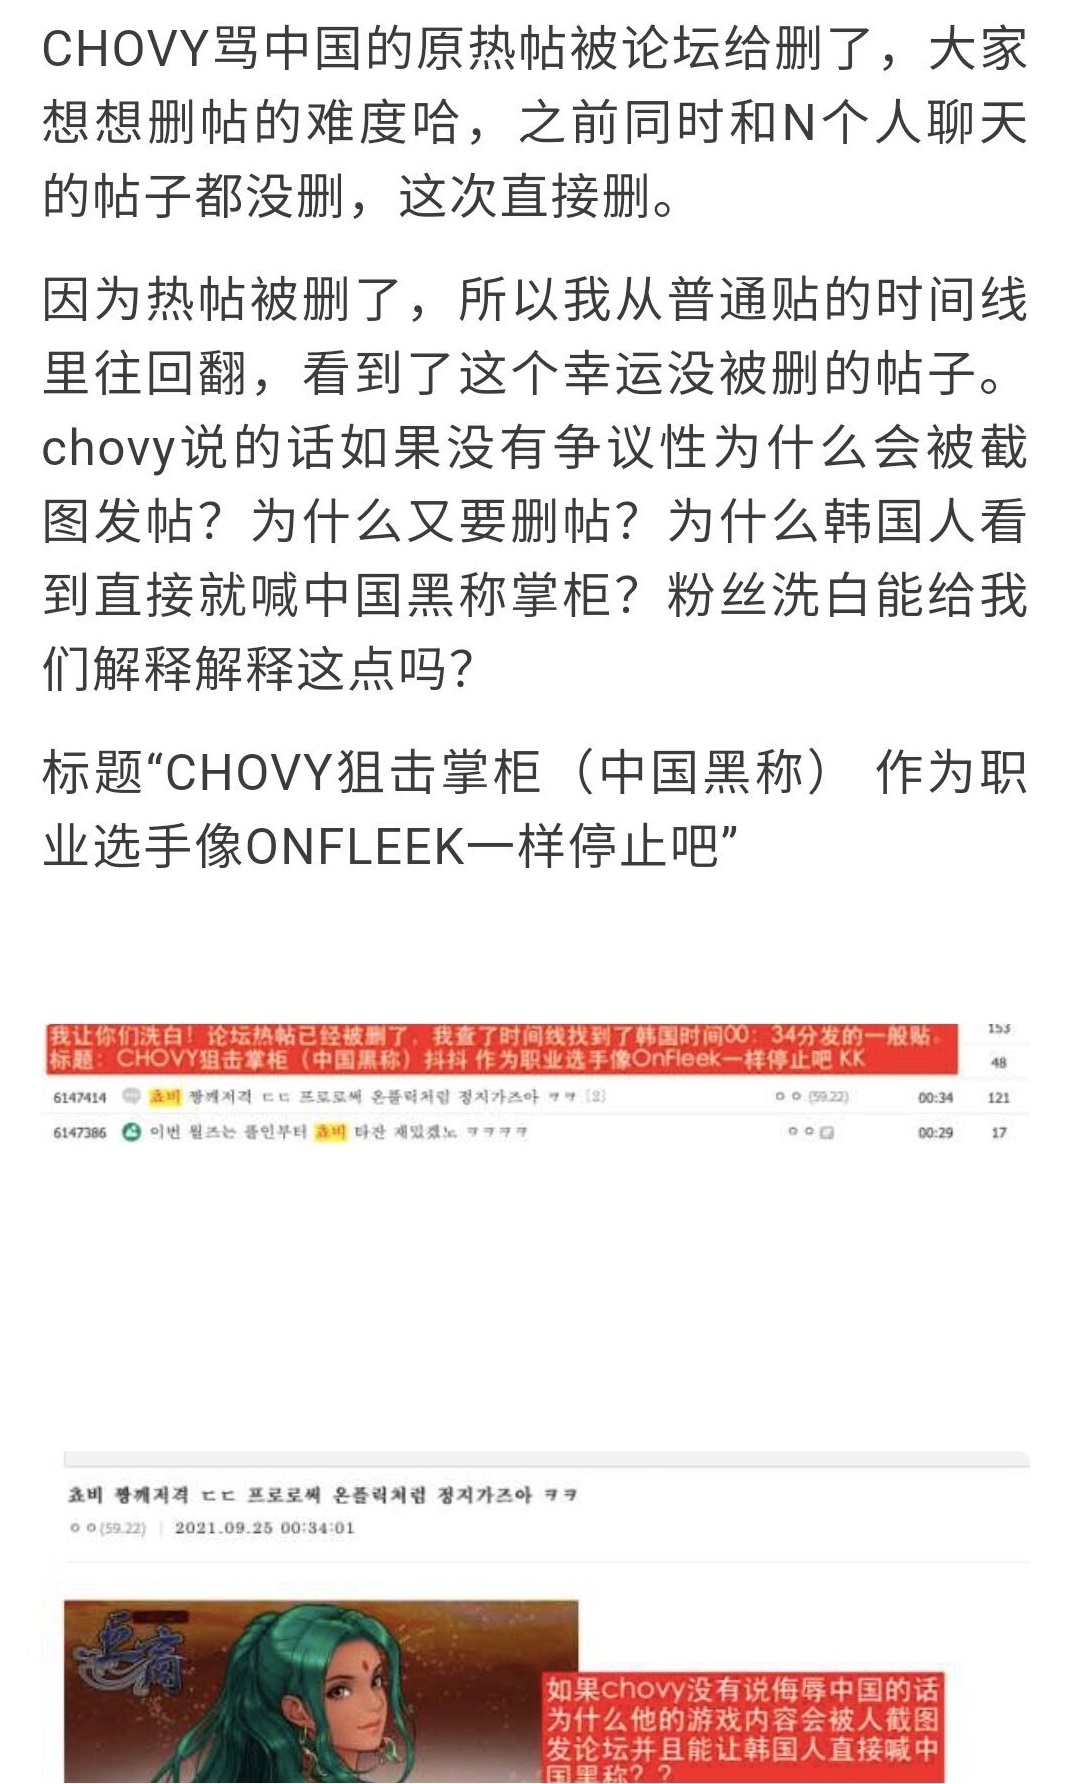 Chovy將面臨禁賽風險！與中國選手發生矛盾，因言論不當引發爭議-圖3